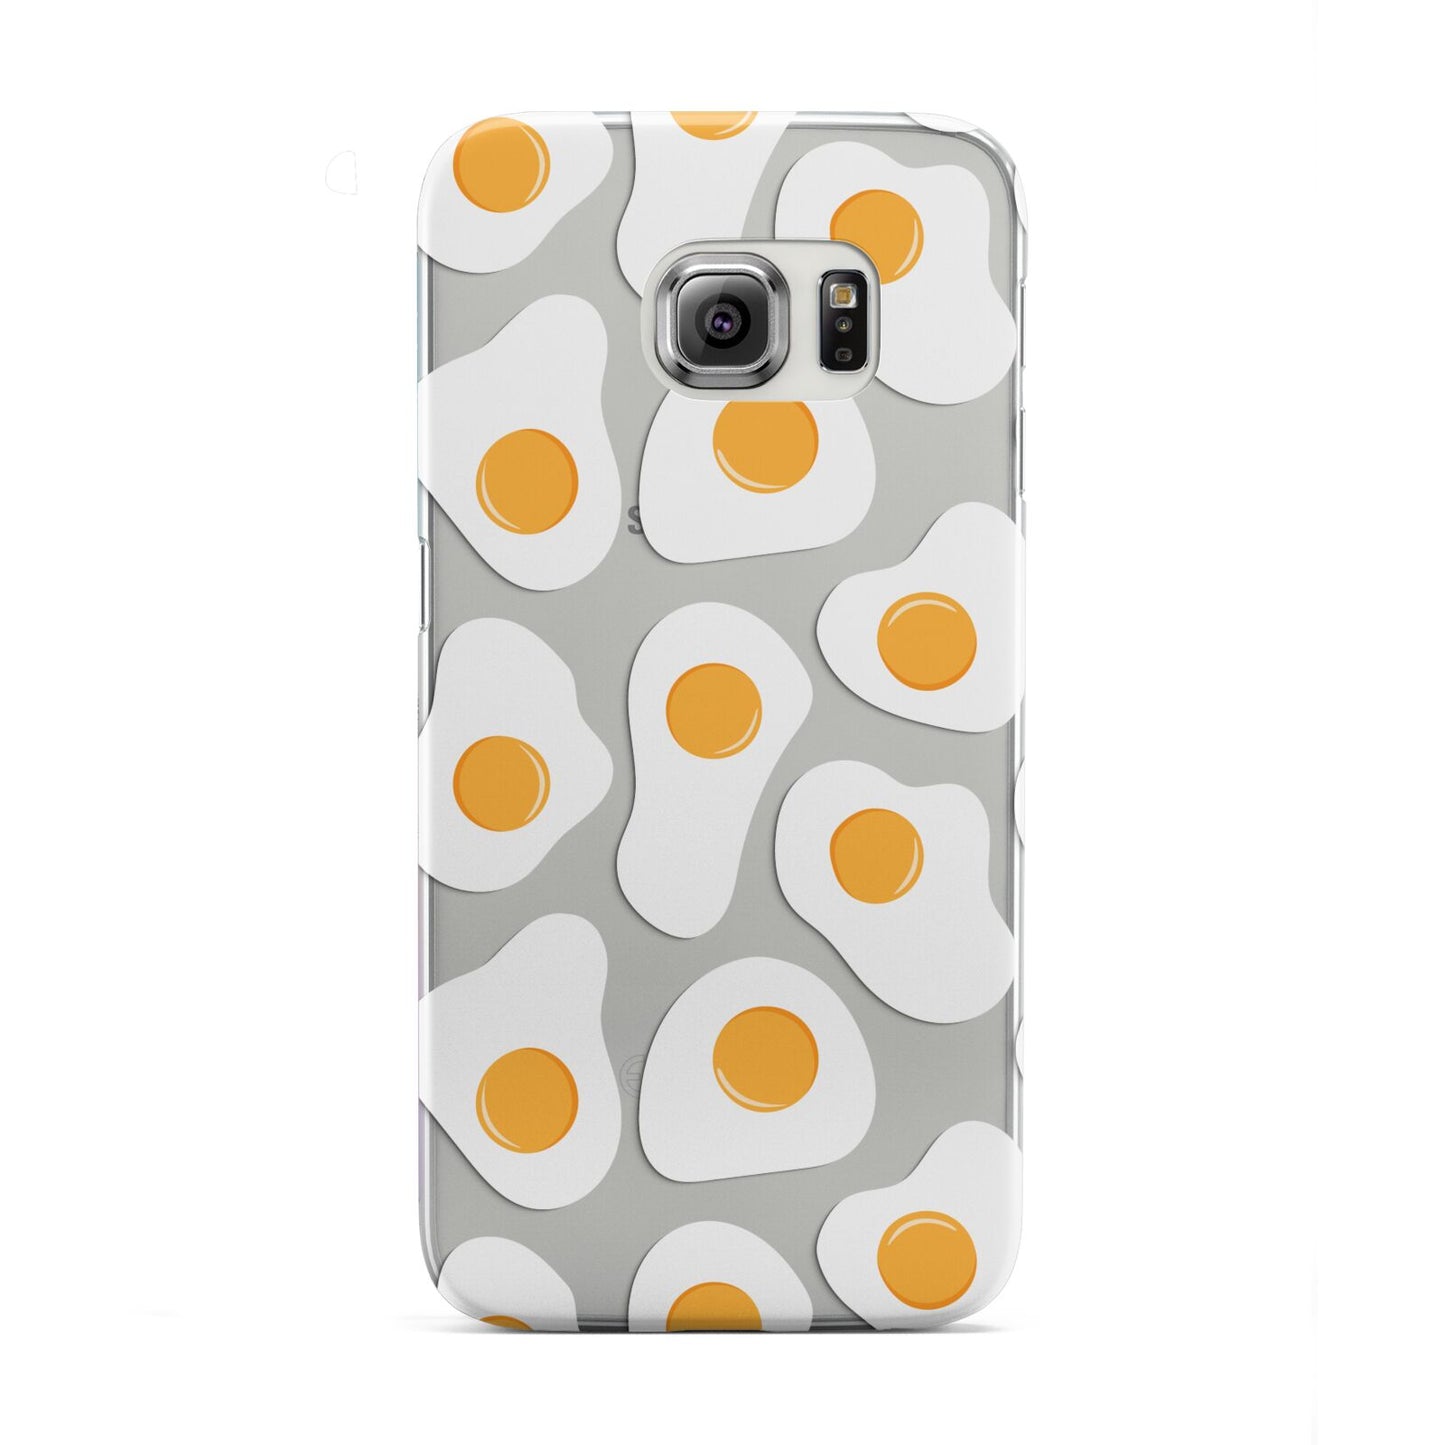 Fried Egg Samsung Galaxy S6 Edge Case